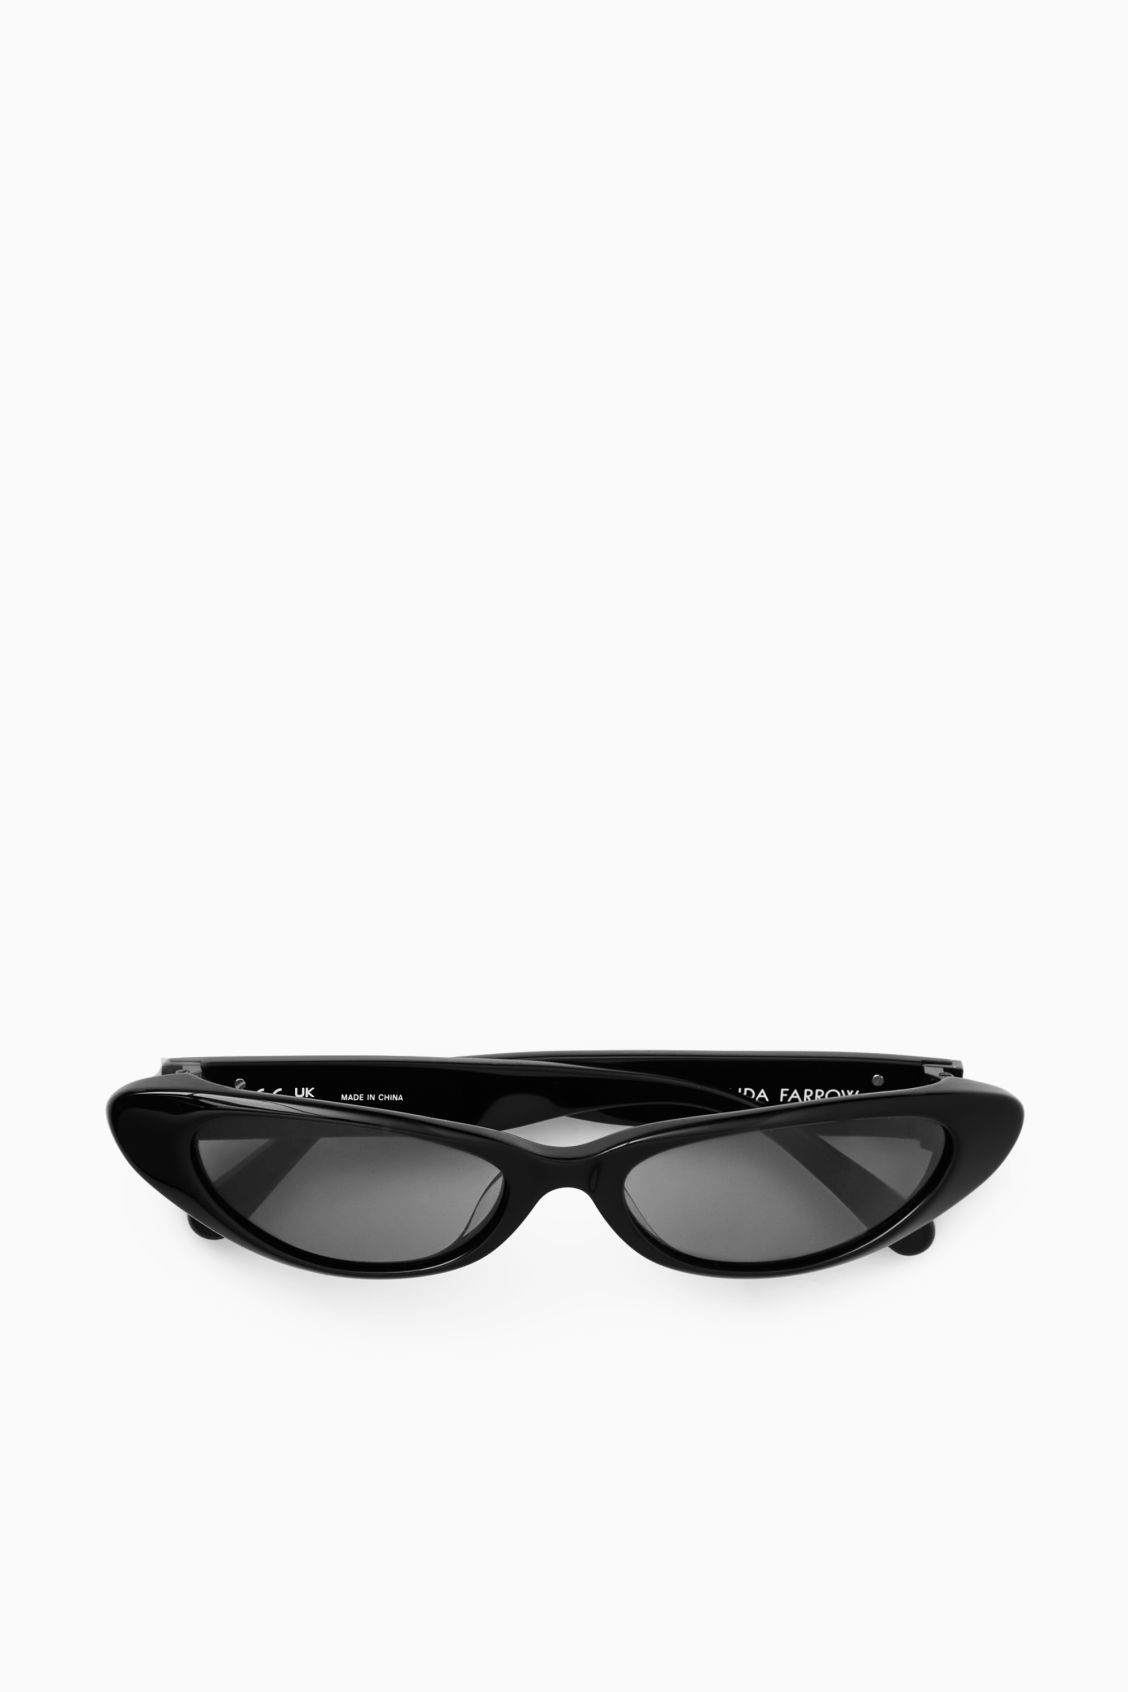 Wing cat-eye sunglasses